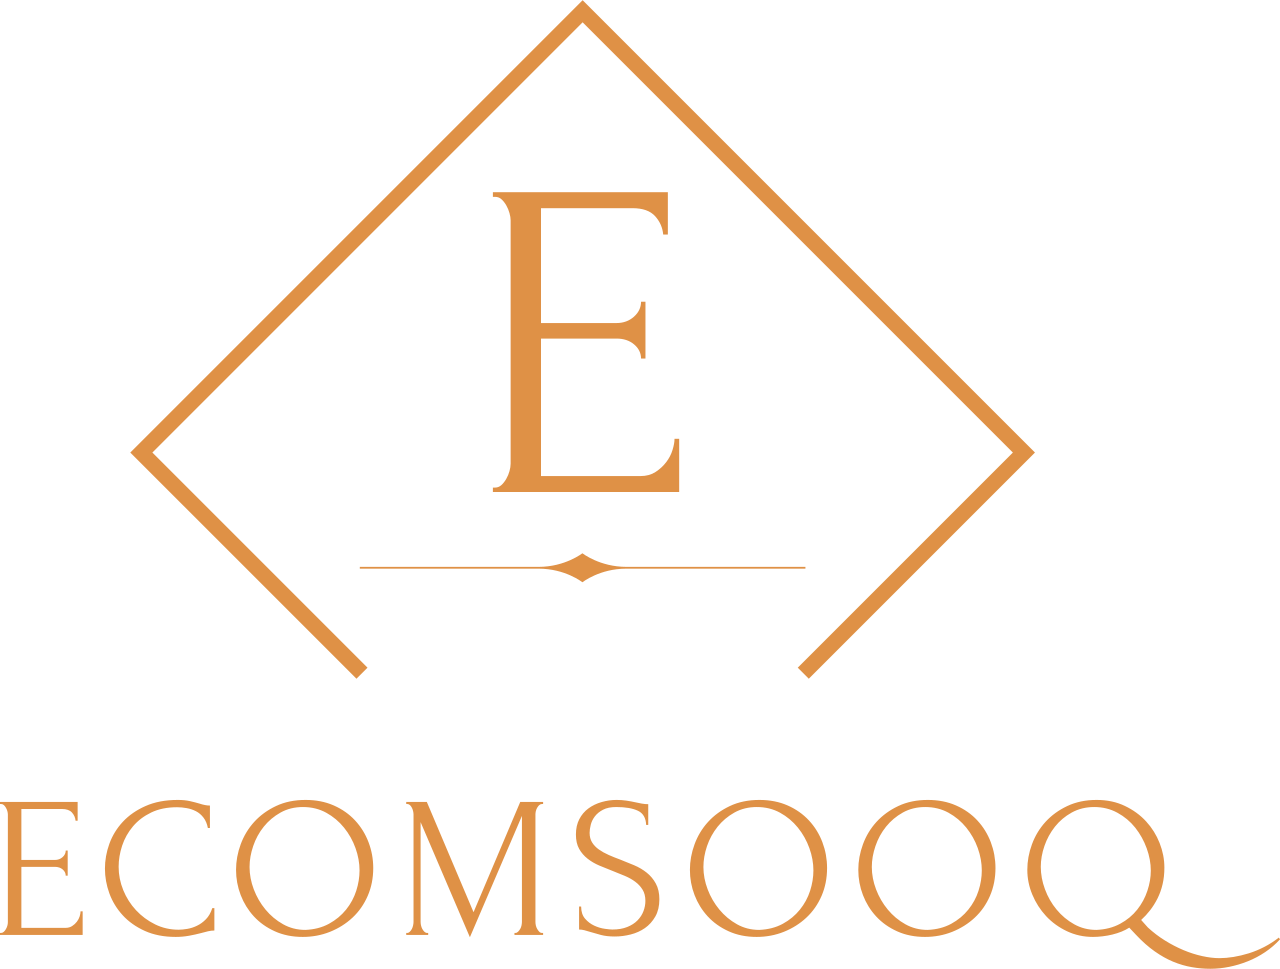 ECOMSOOQ's web page